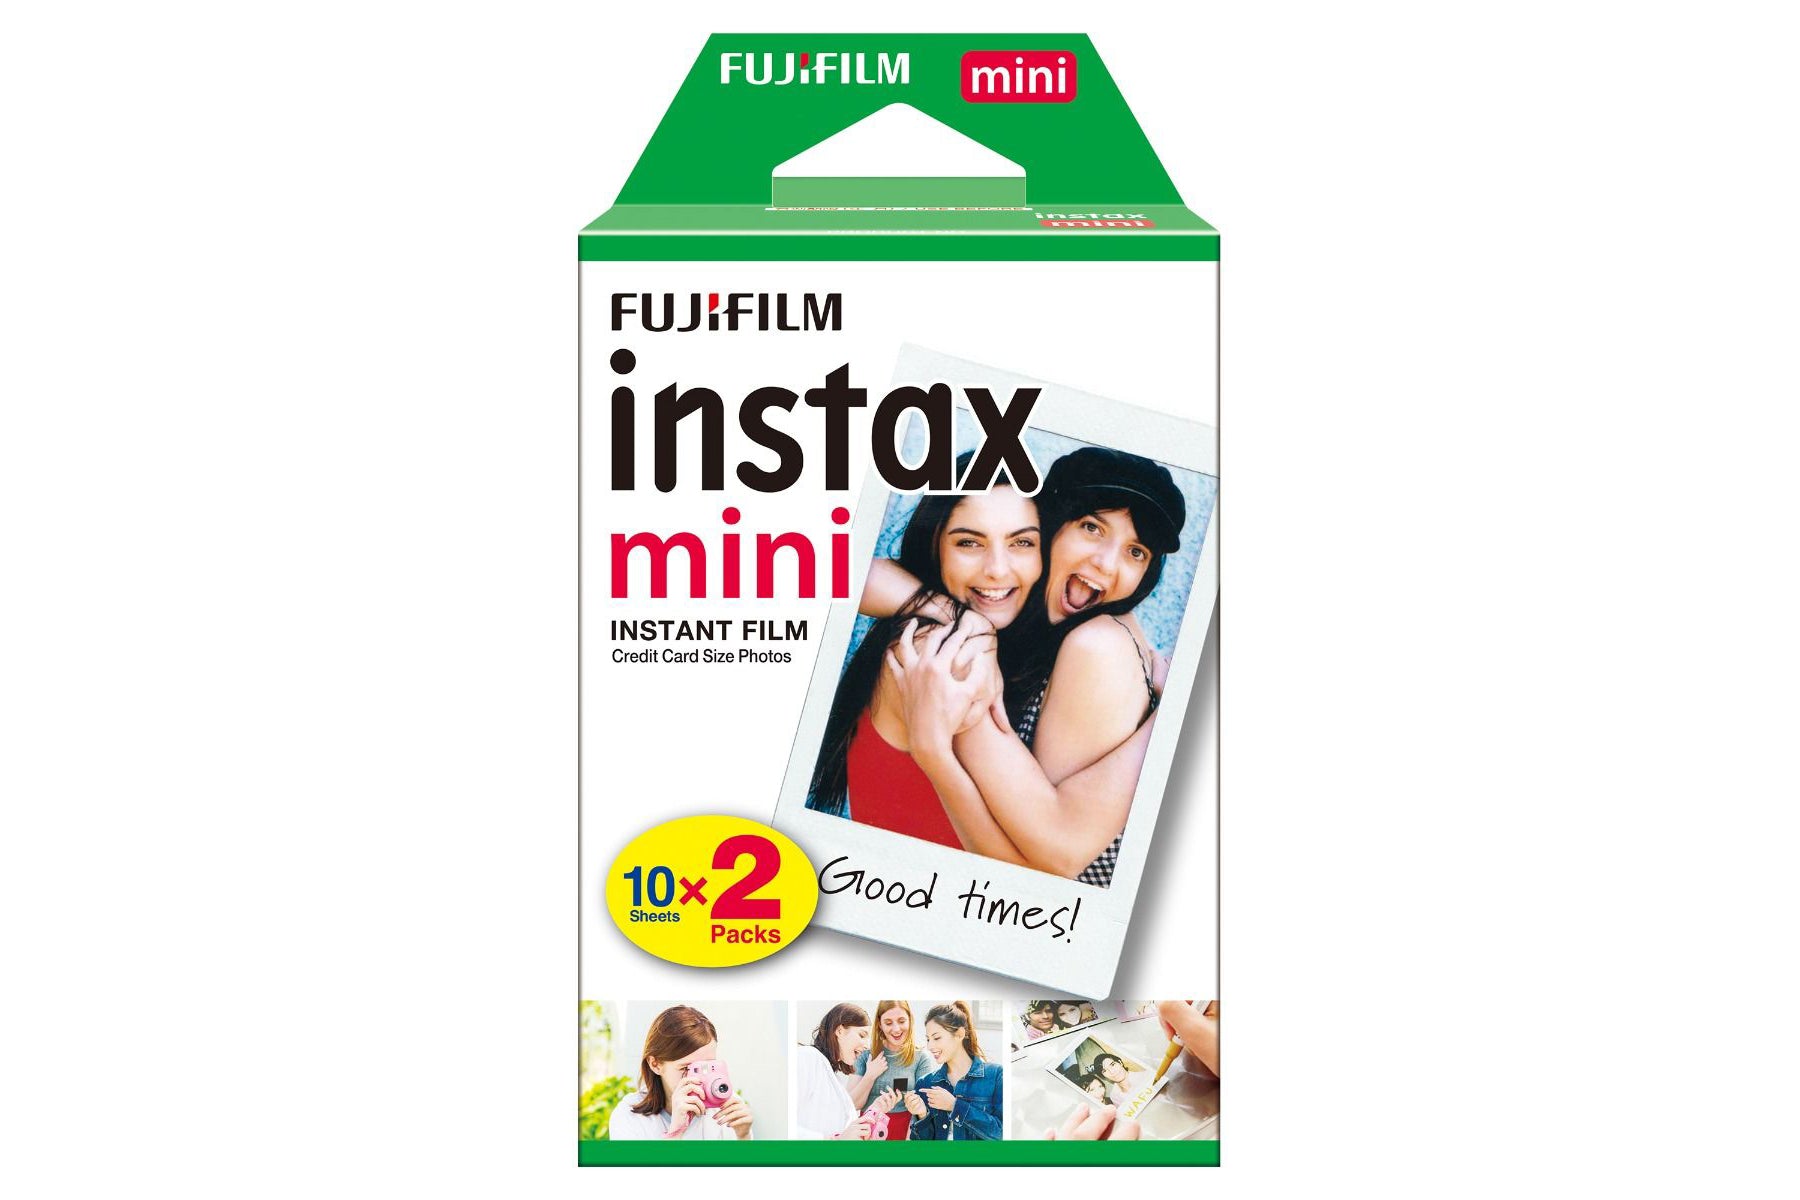 Fujifilm Instax Mini Instant Photo Film - White, Photo & Video